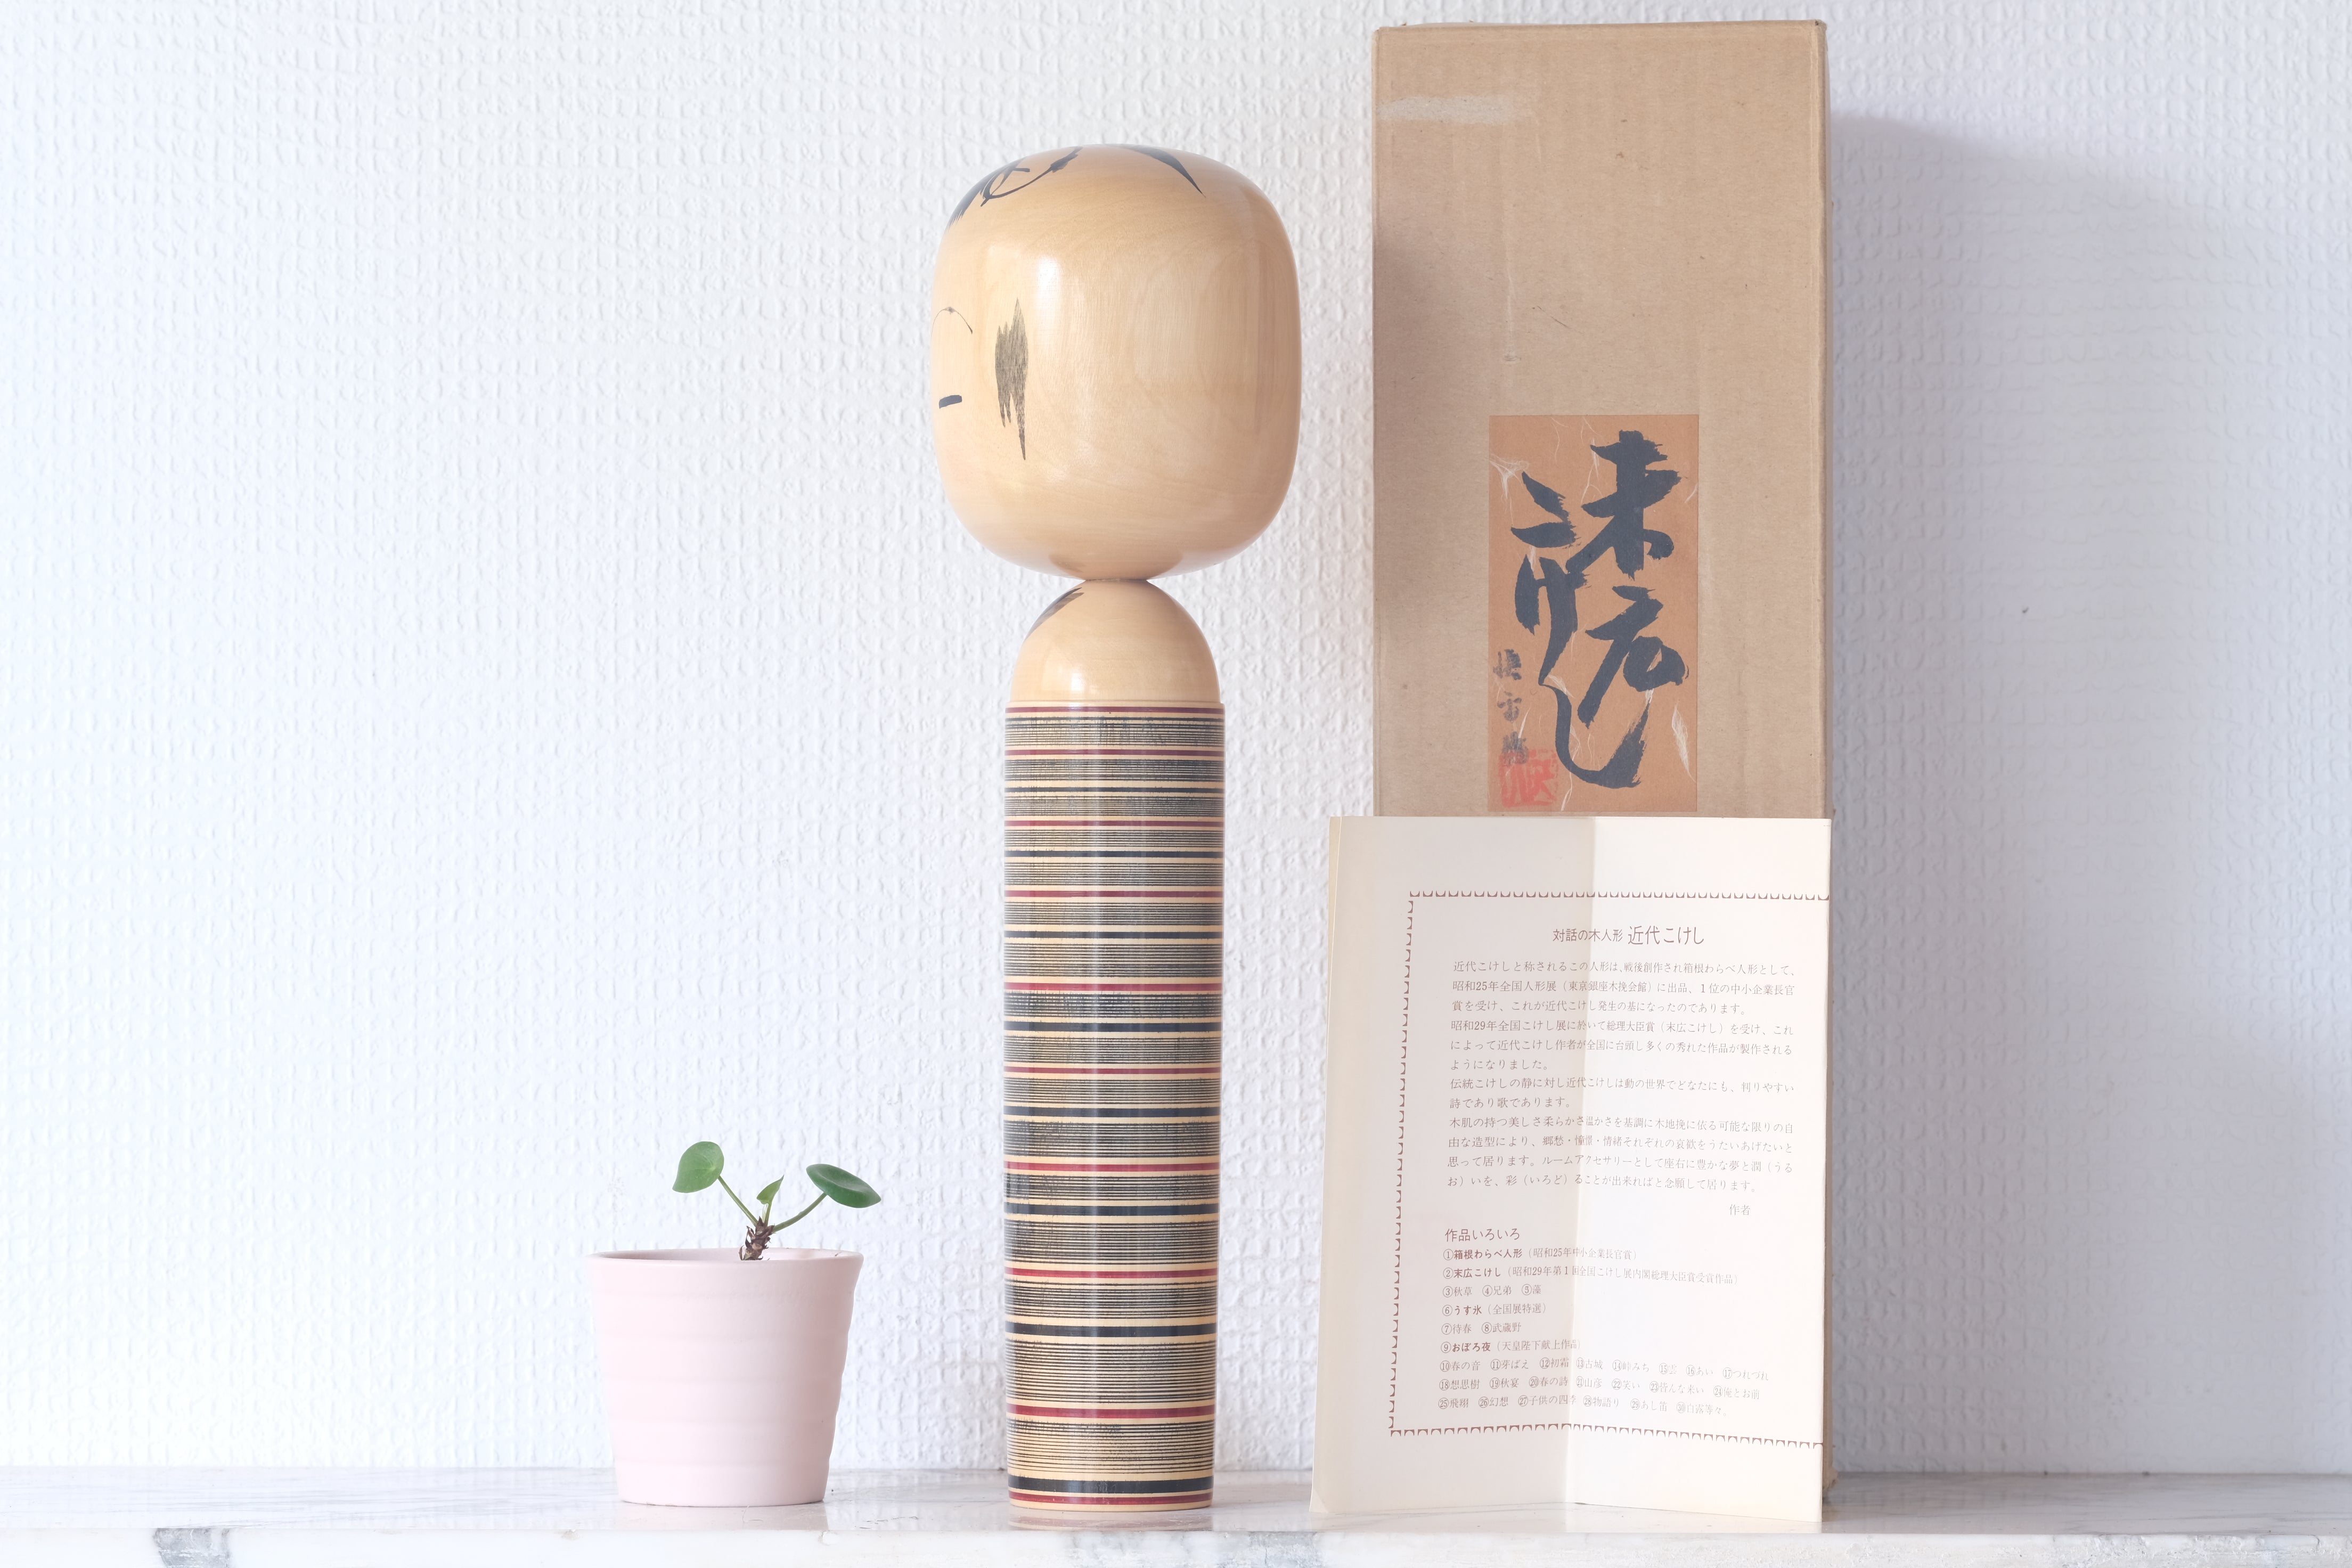 Rare Vintage Creative Kokeshi by Katase Kahei 片瀬快平 (1922-2015) | With Original Box | 32 cm